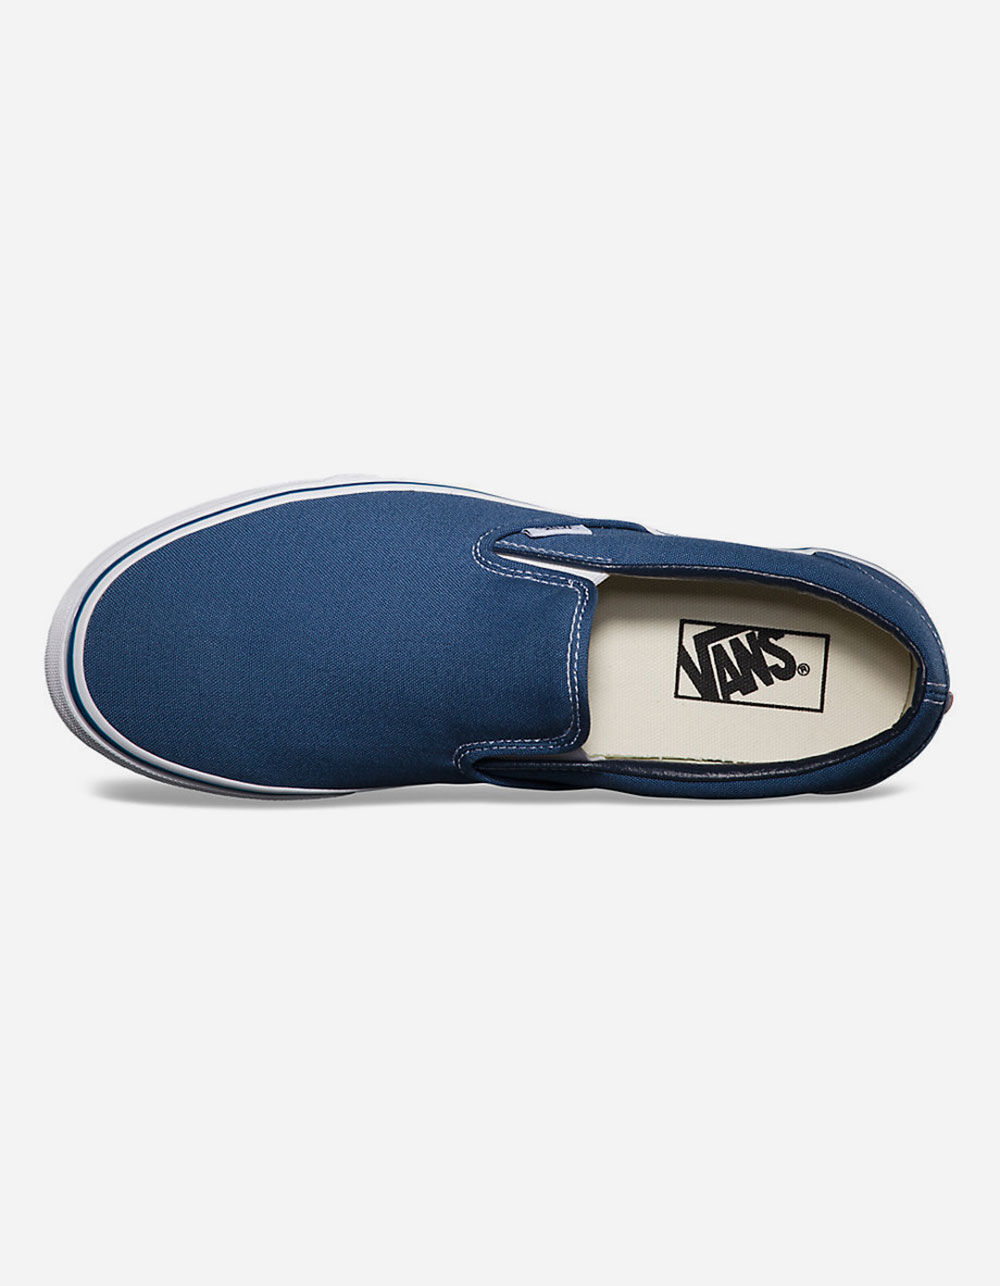 VANS Classic Slip-On Navy Shoes - BLUE | Tillys